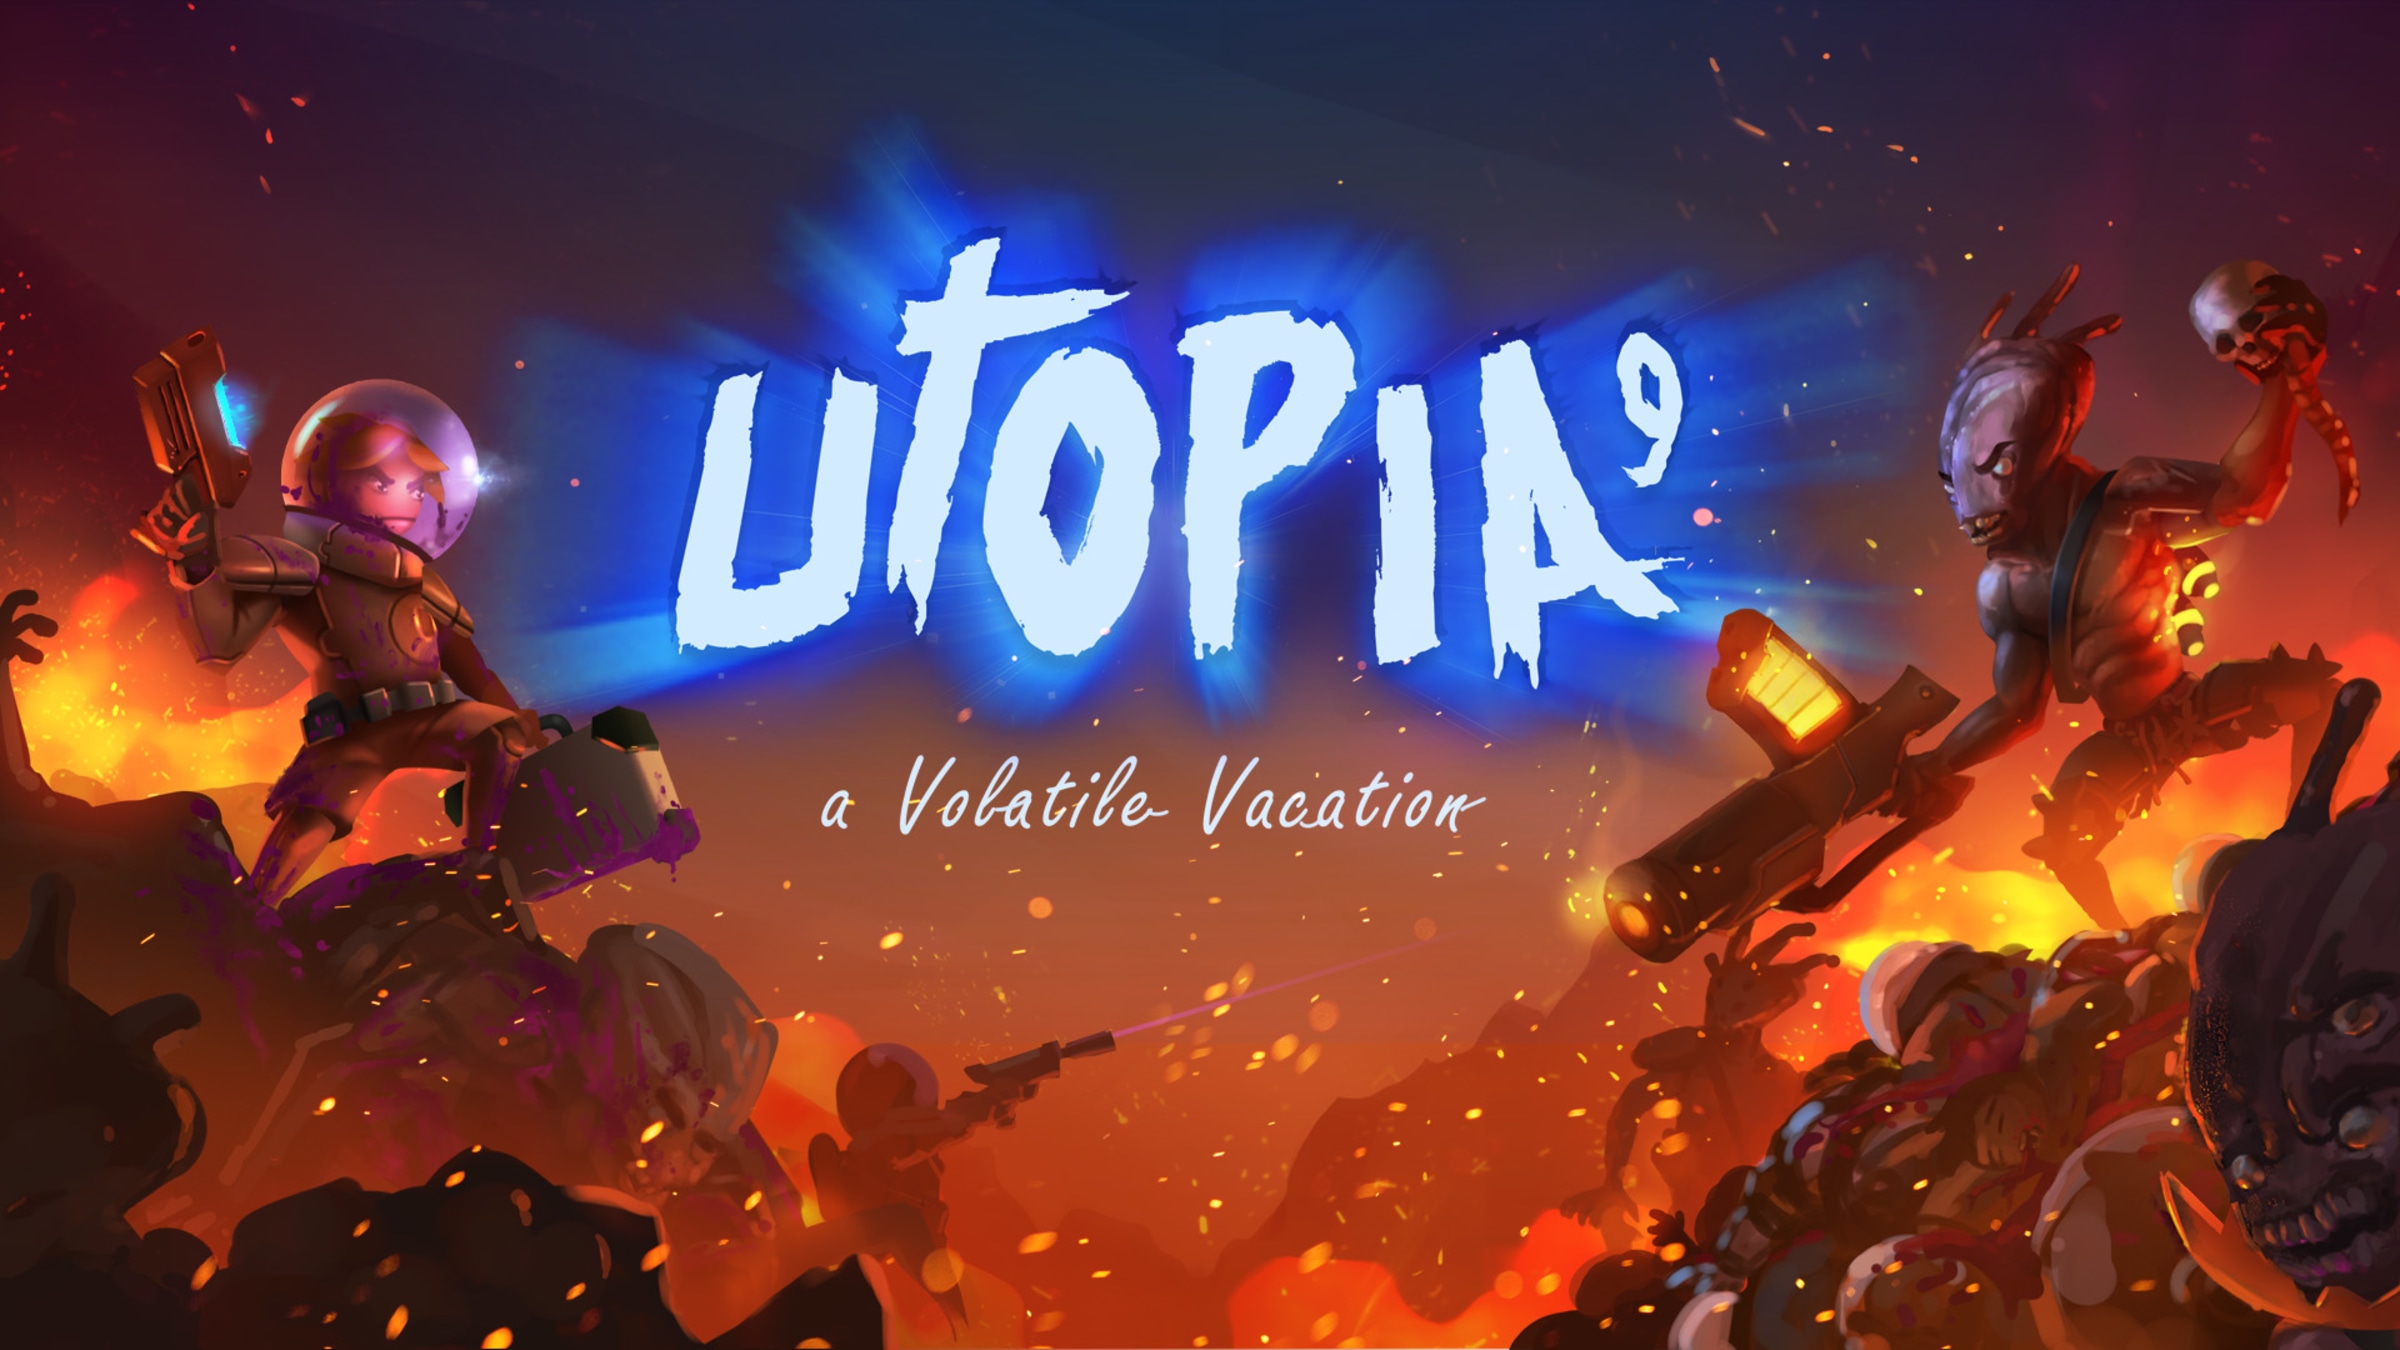 UTOPIA 9 - A Volatile Vacation for Nintendo Switch - Nintendo